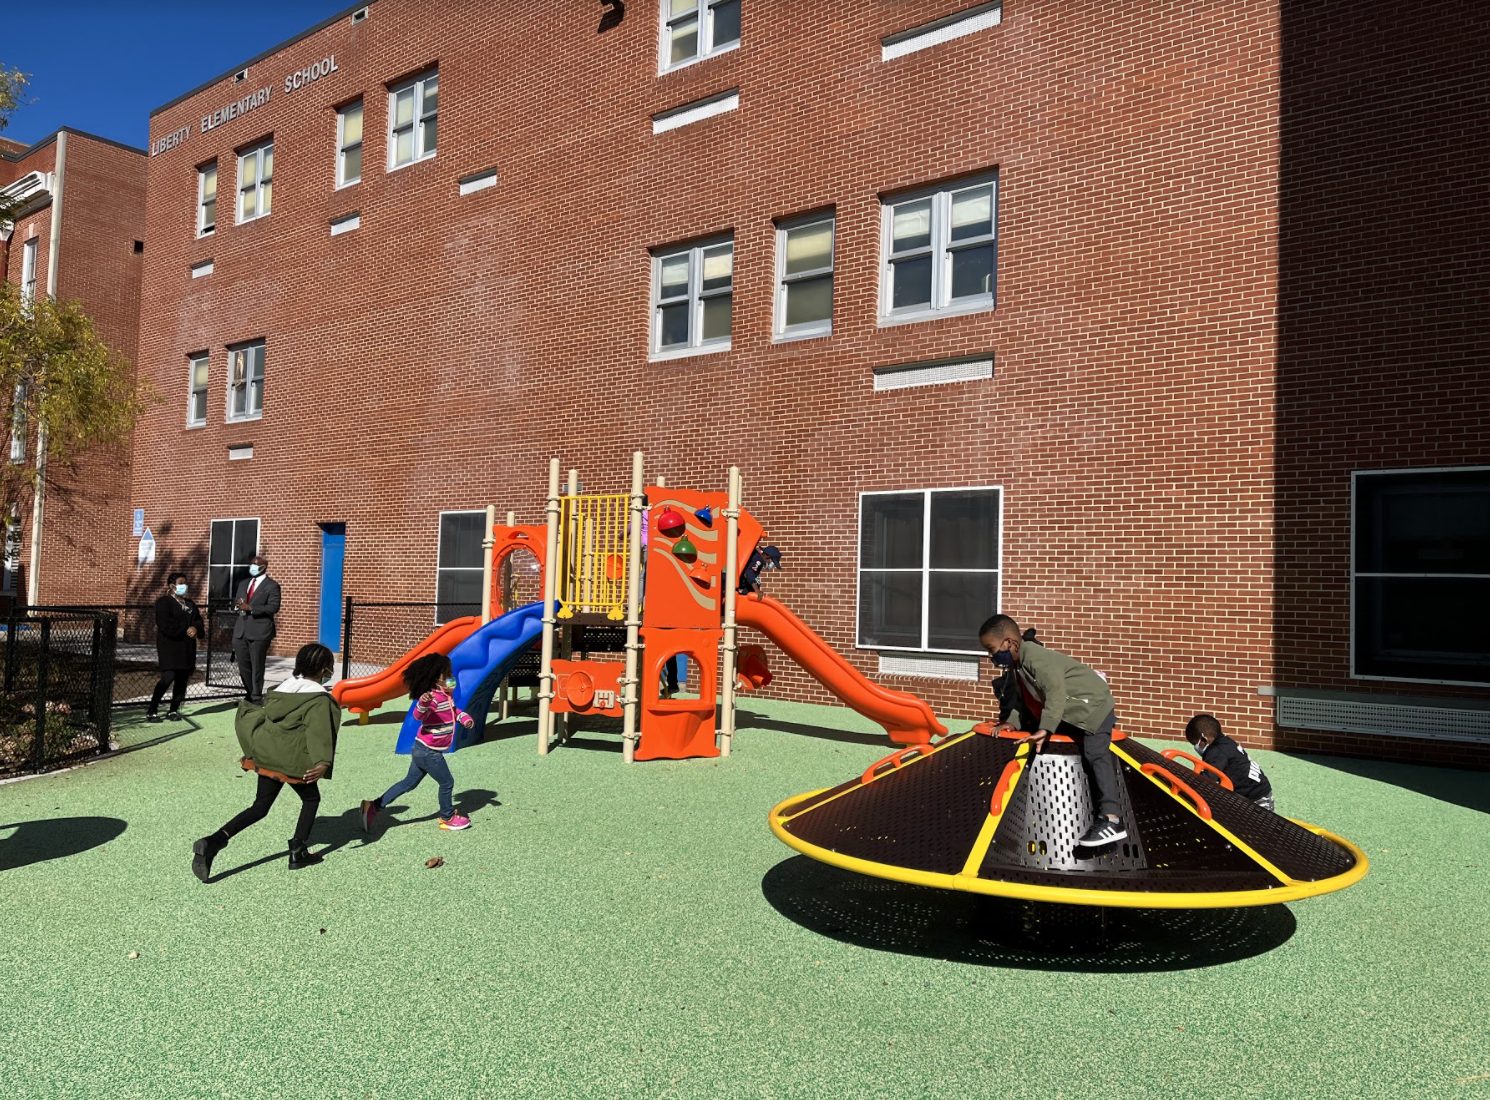 Kids playing on new playground